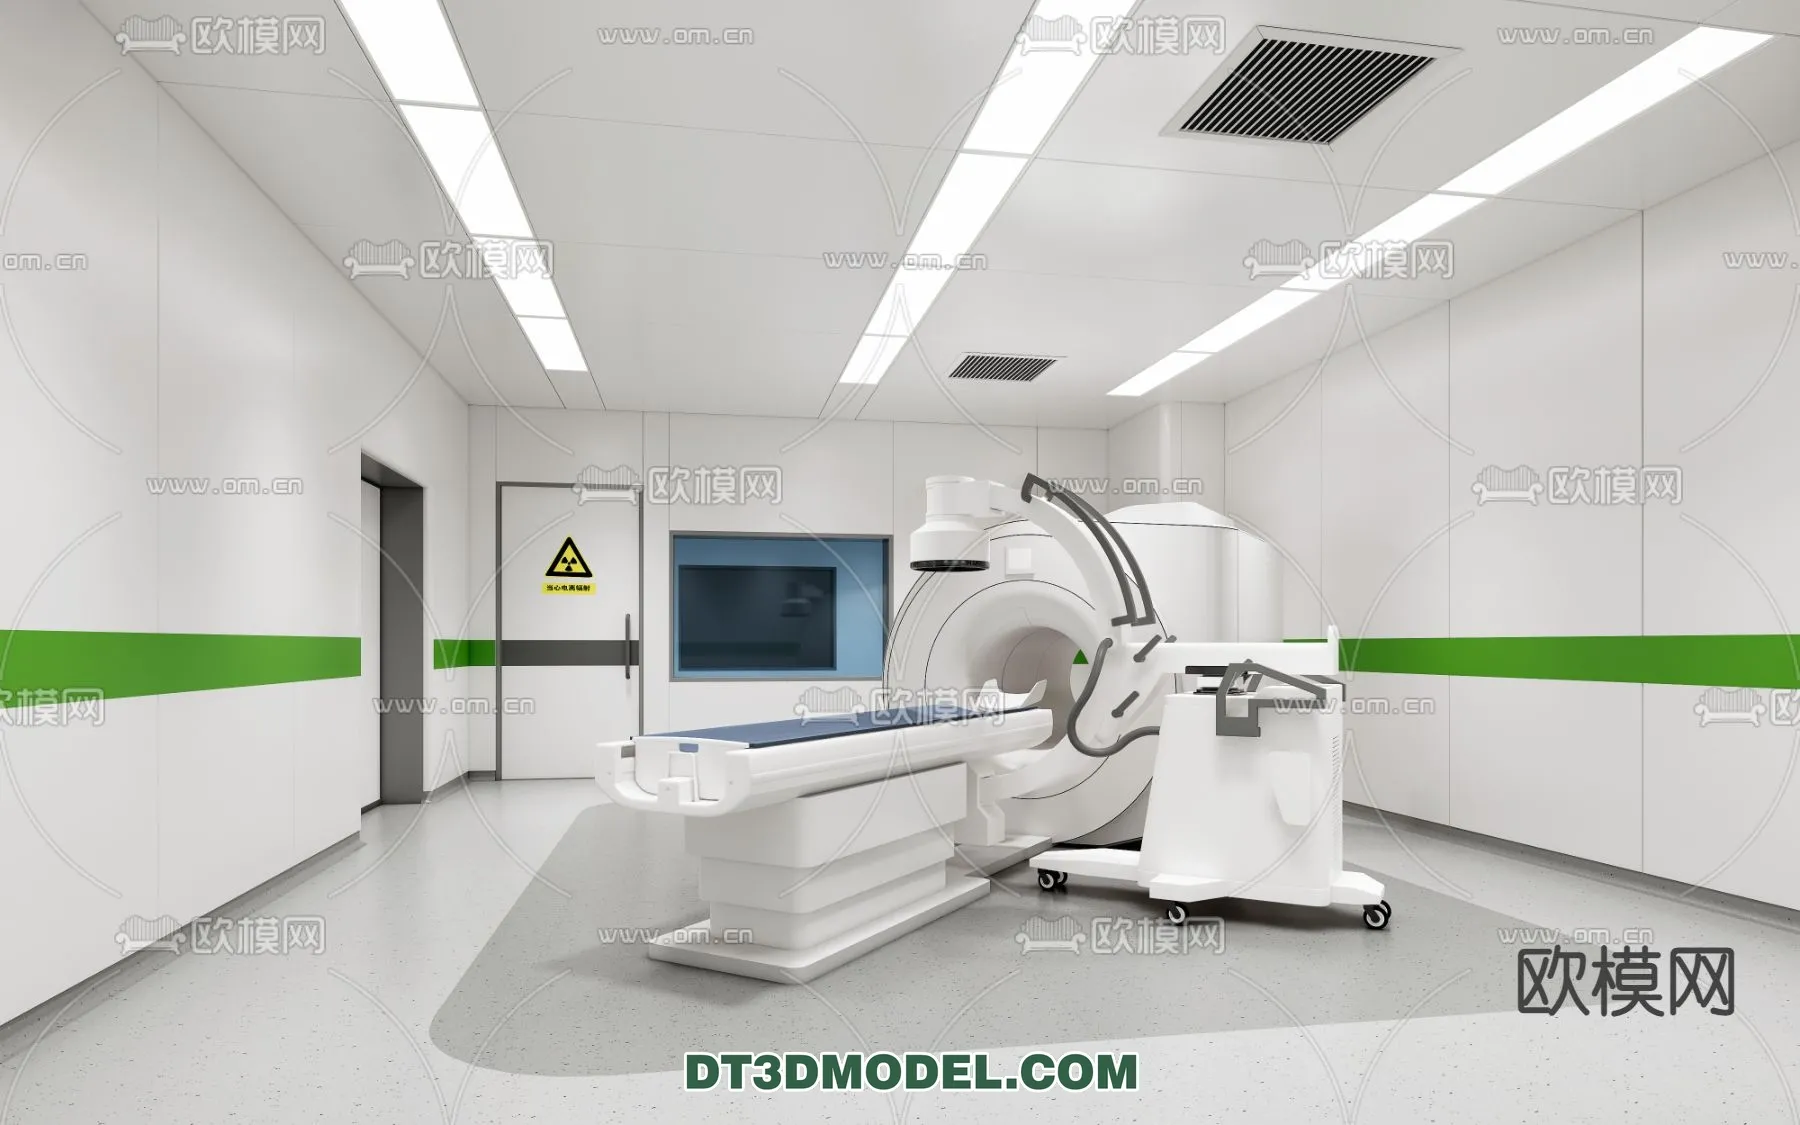 HOSPITAL 3D SCENES – MODERN – 0102